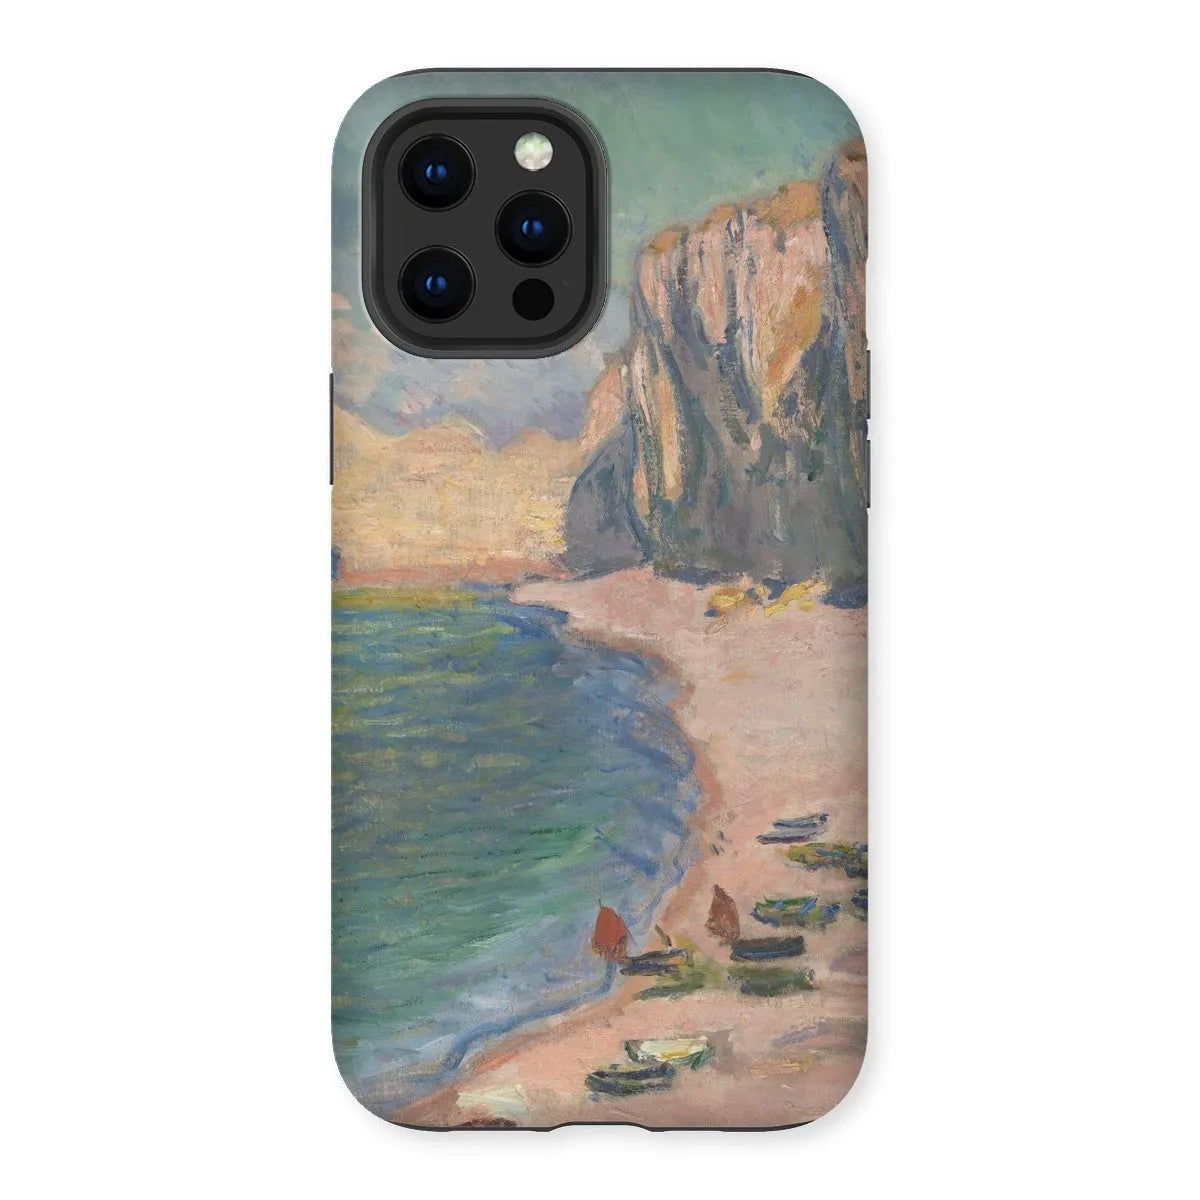 étretat - Impressionist Art Phone Case - Claude Monet - Iphone 12 Pro Max / Matte - Mobile Phone Cases - Aesthetic Art